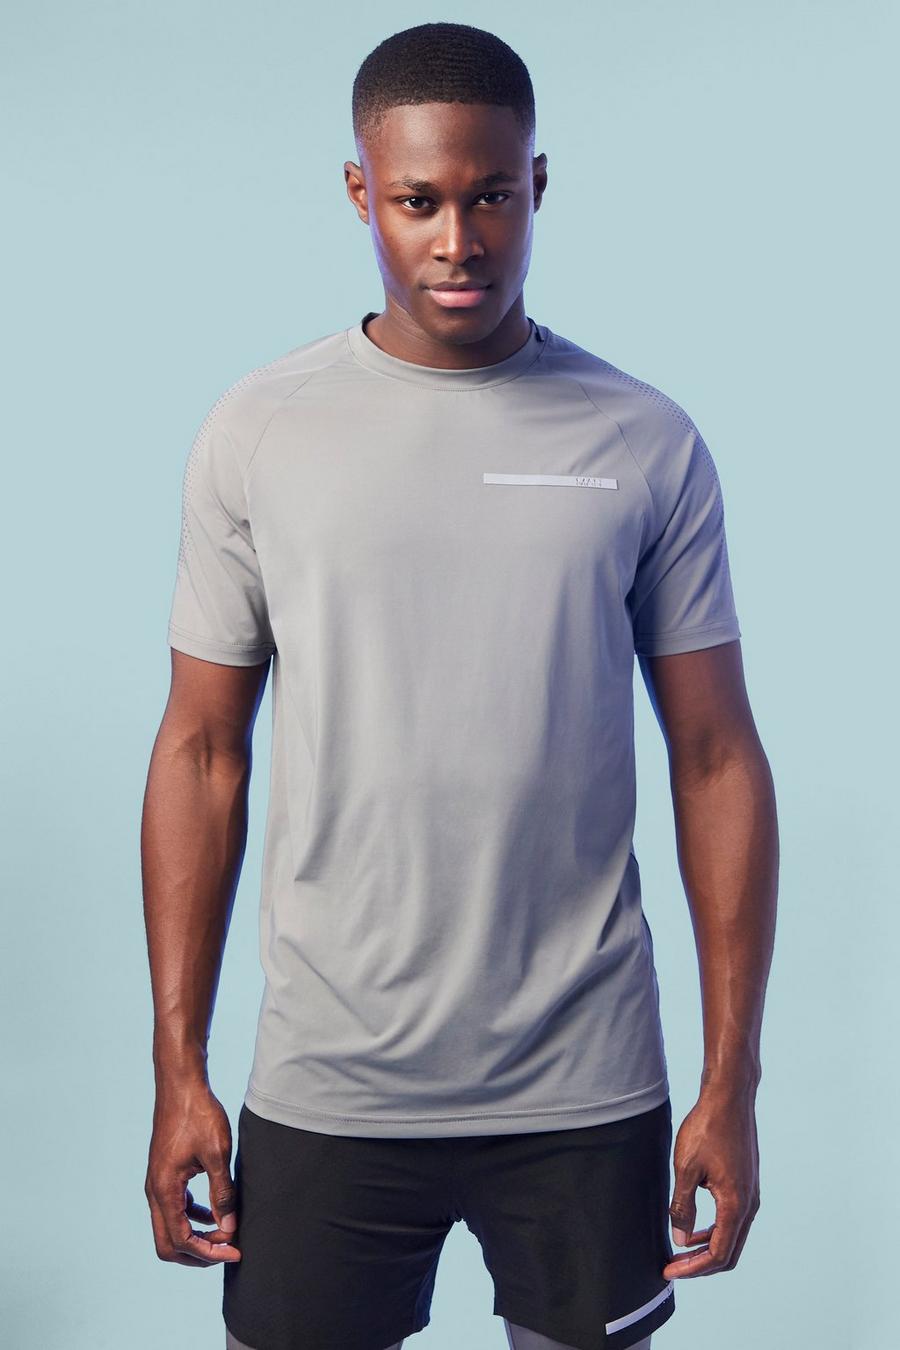 Man Active X Pr Performance Raglan T-Shirt, Charcoal grey